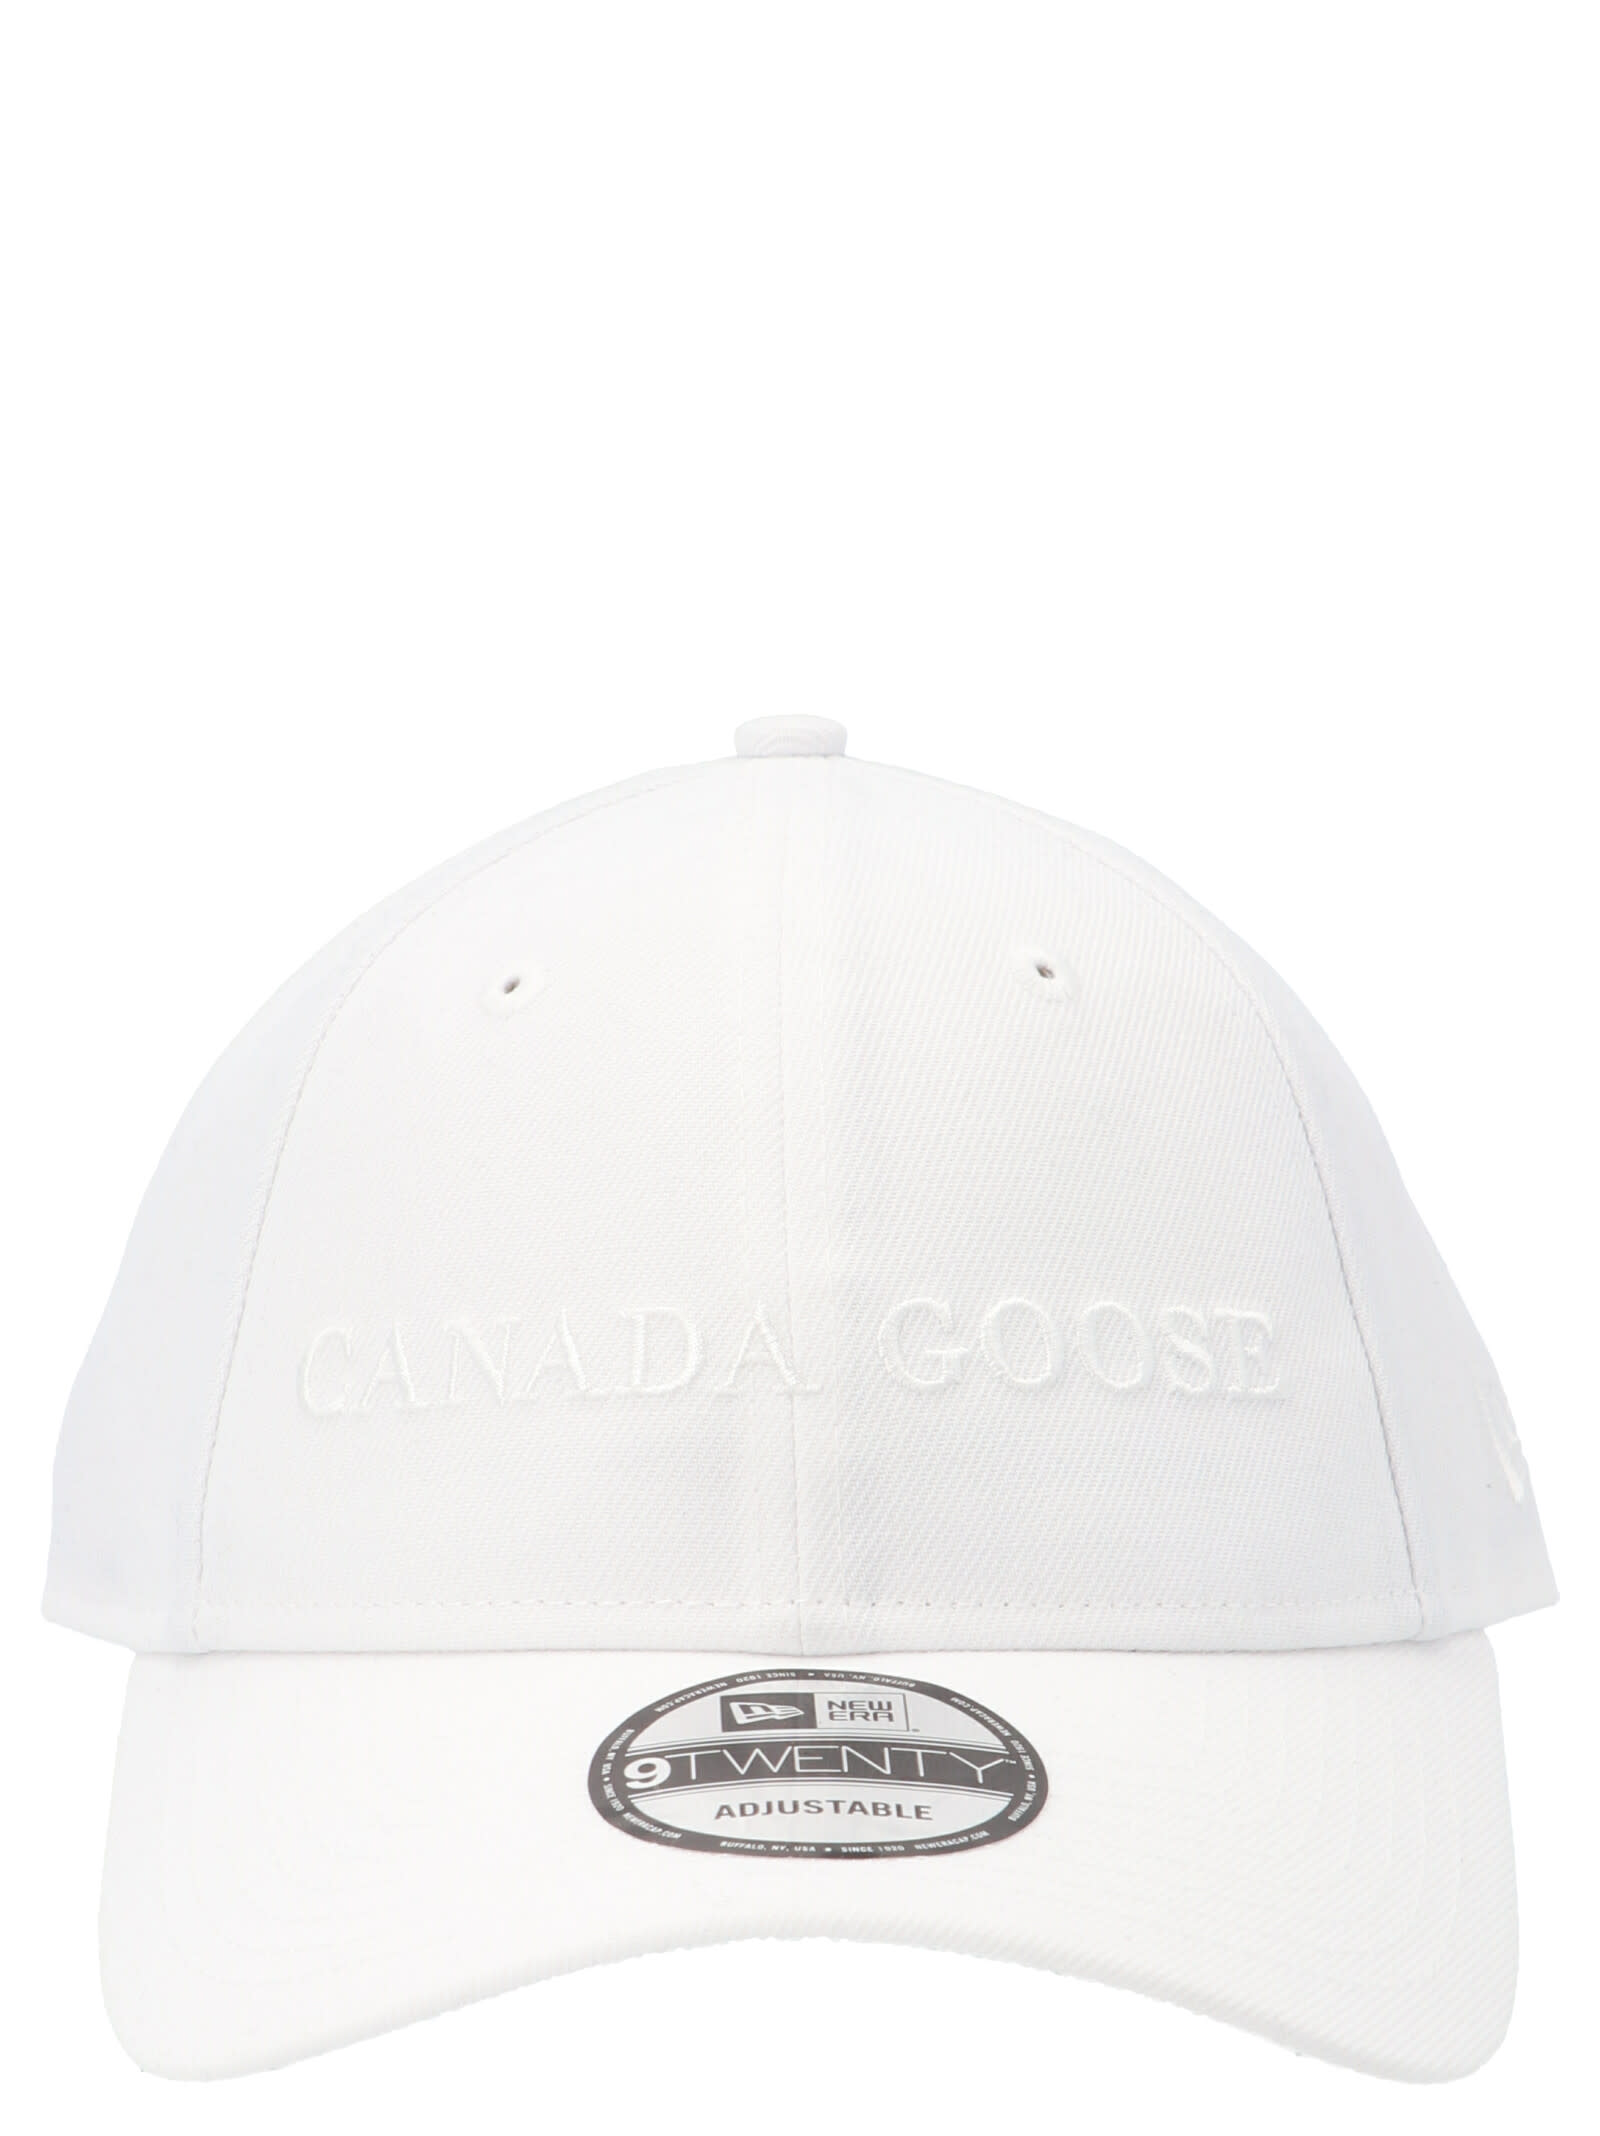 Canada Goose wordmark Cap